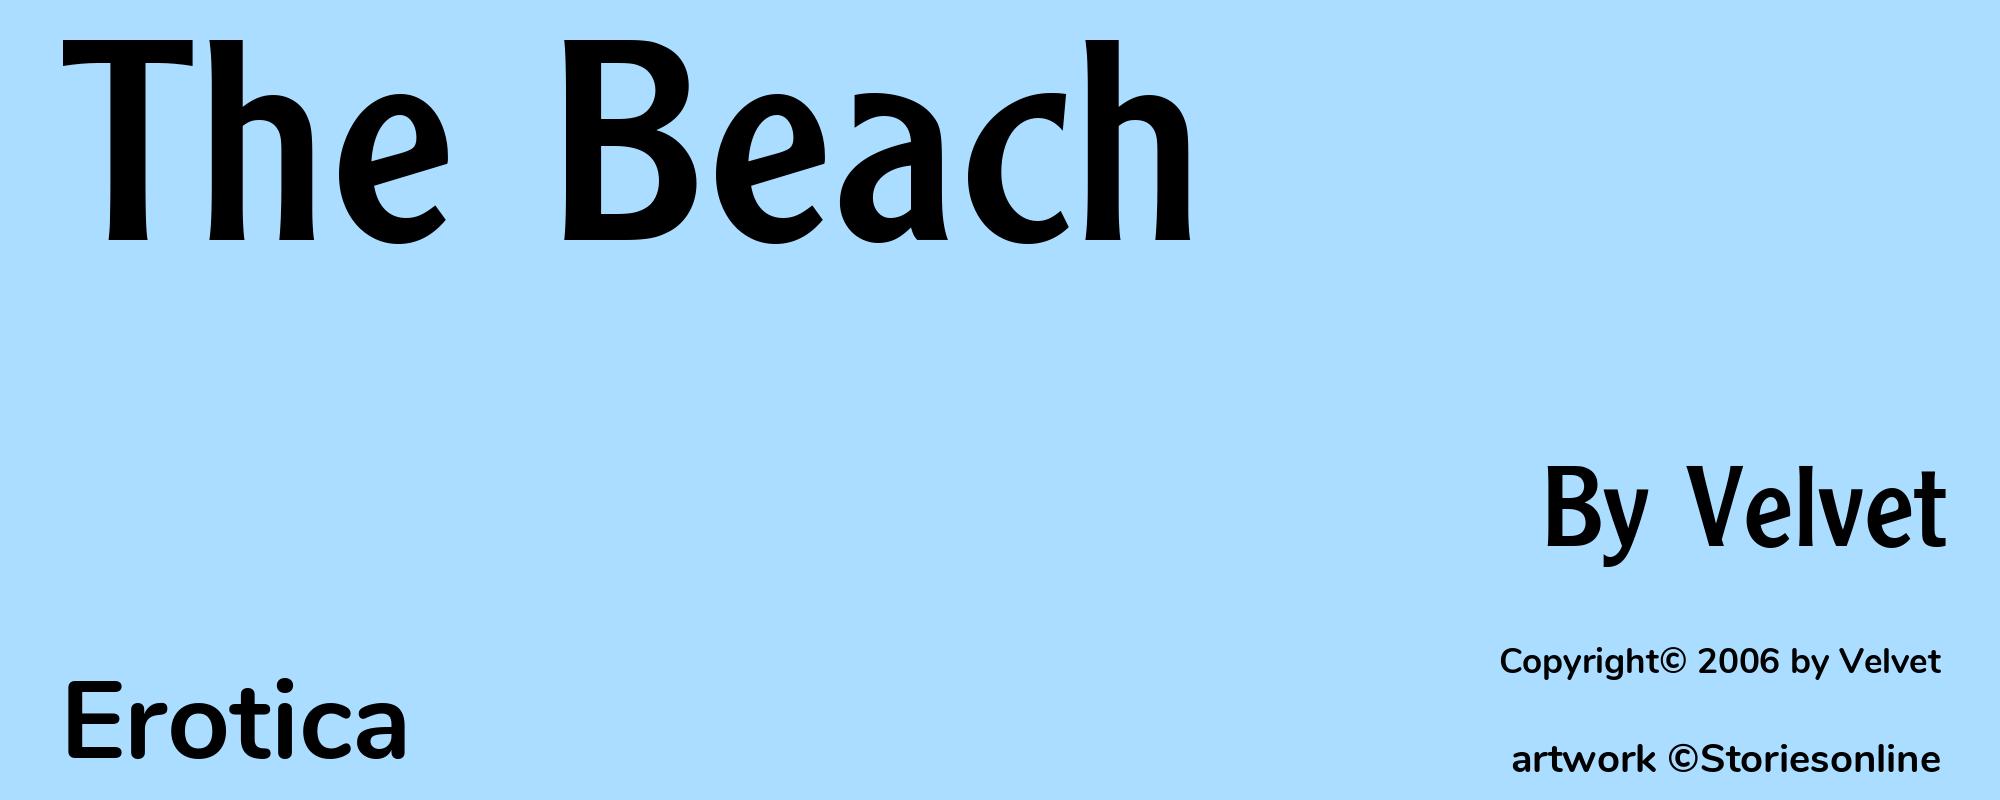 The Beach - Cover